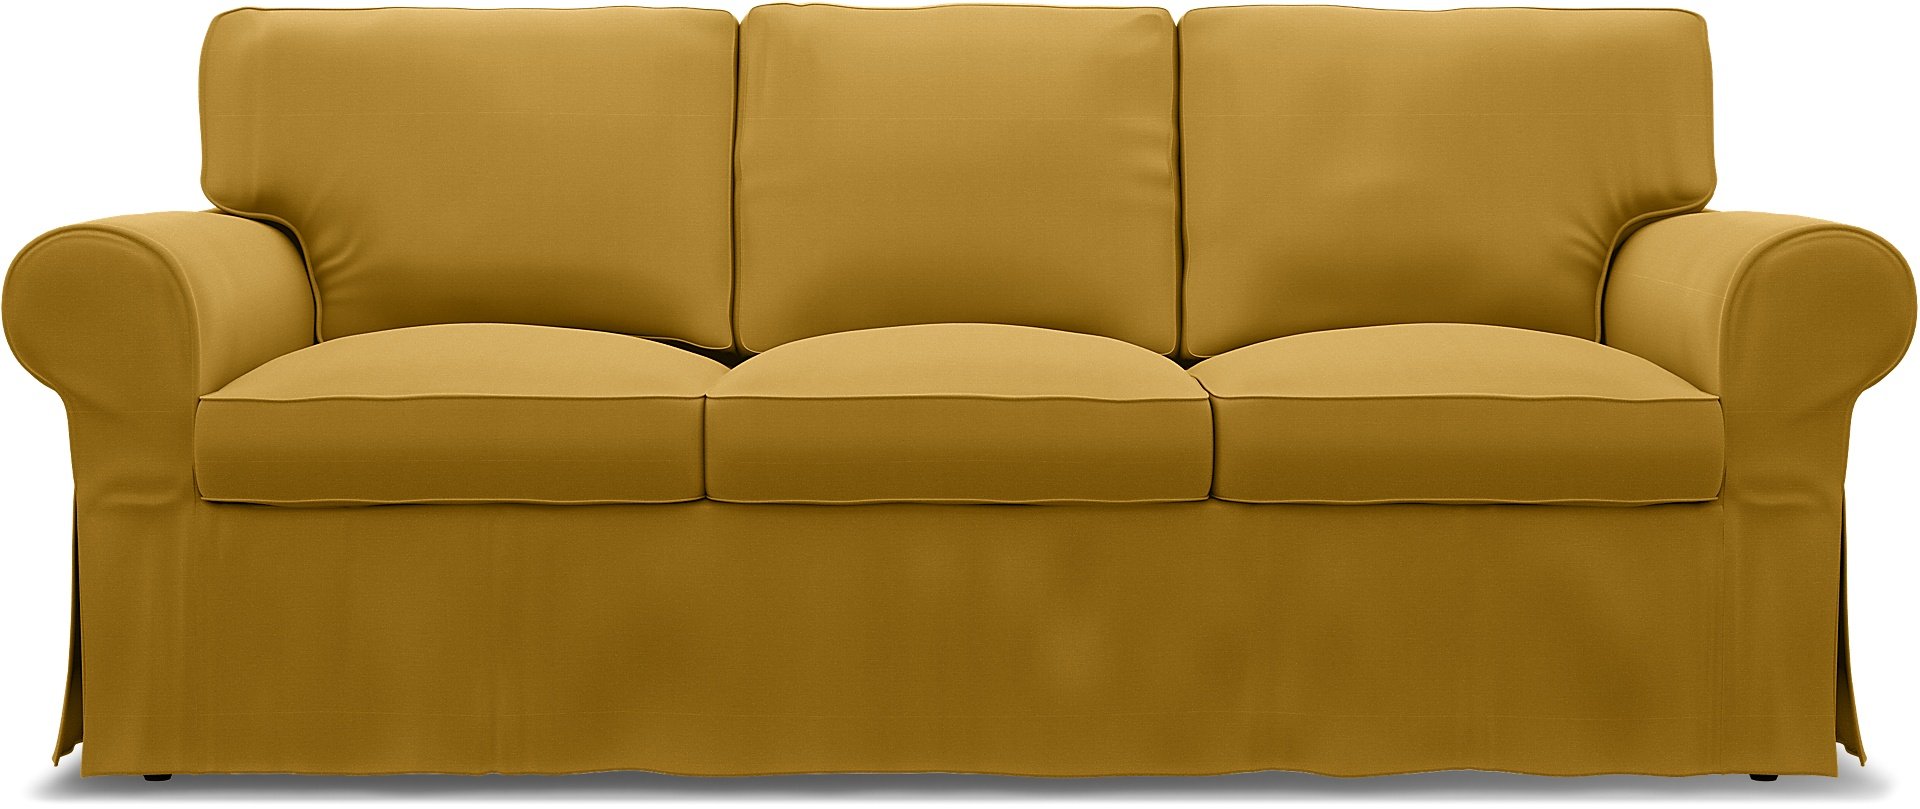 IKEA - Ektorp 3 Seater Sofa Bed Cover, Honey Mustard, Cotton - Bemz